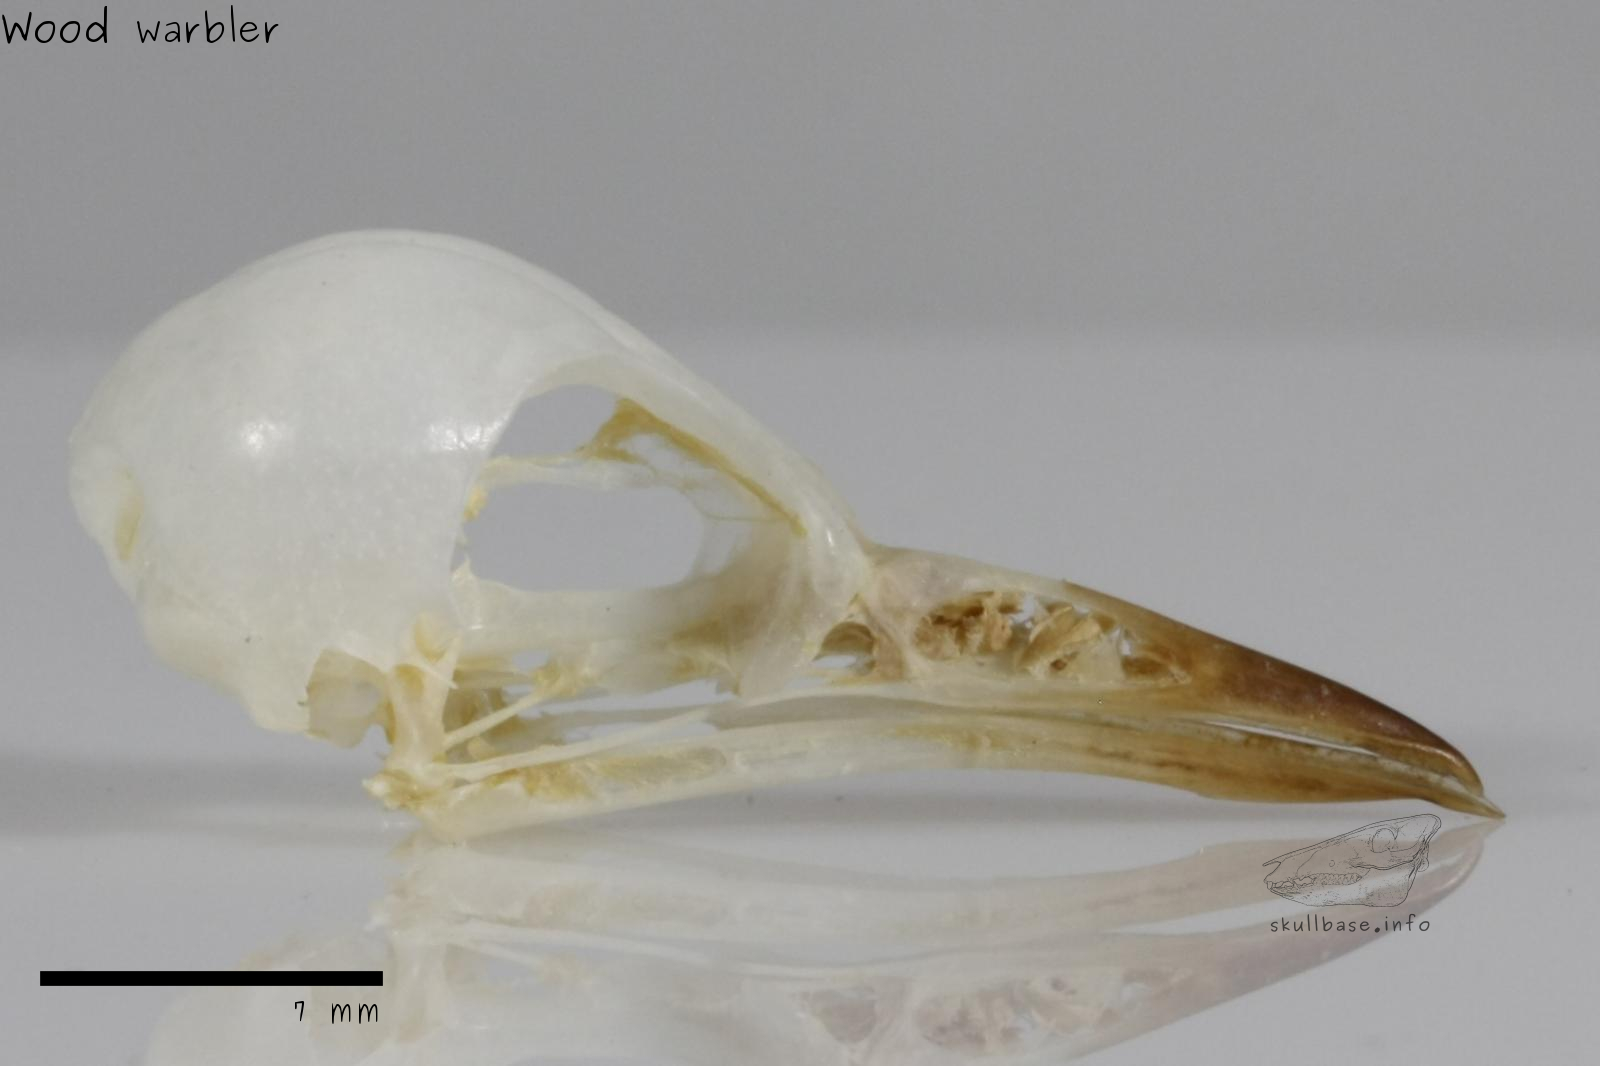 Wood warbler (Phylloscopus sibilatrix) skull lateral view